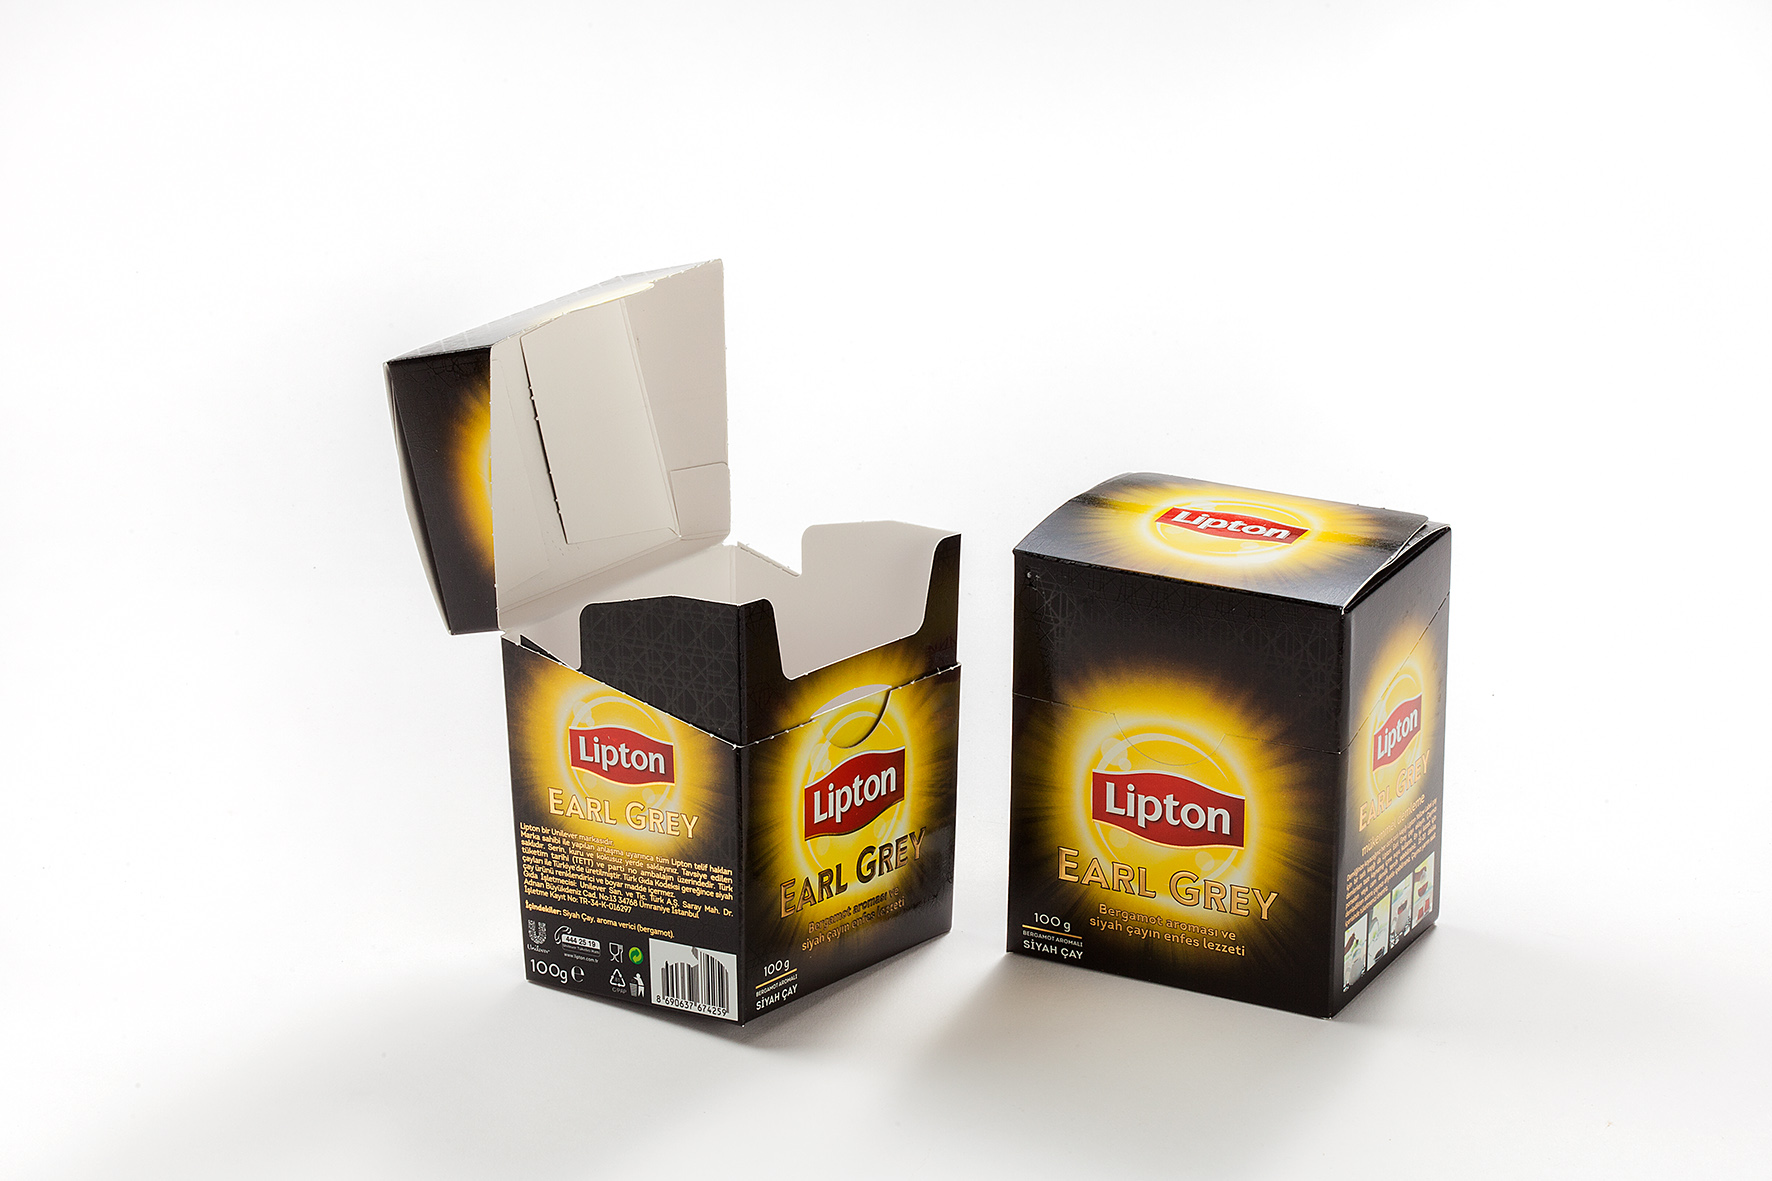 Lipton Earl Grey 100 g cartone